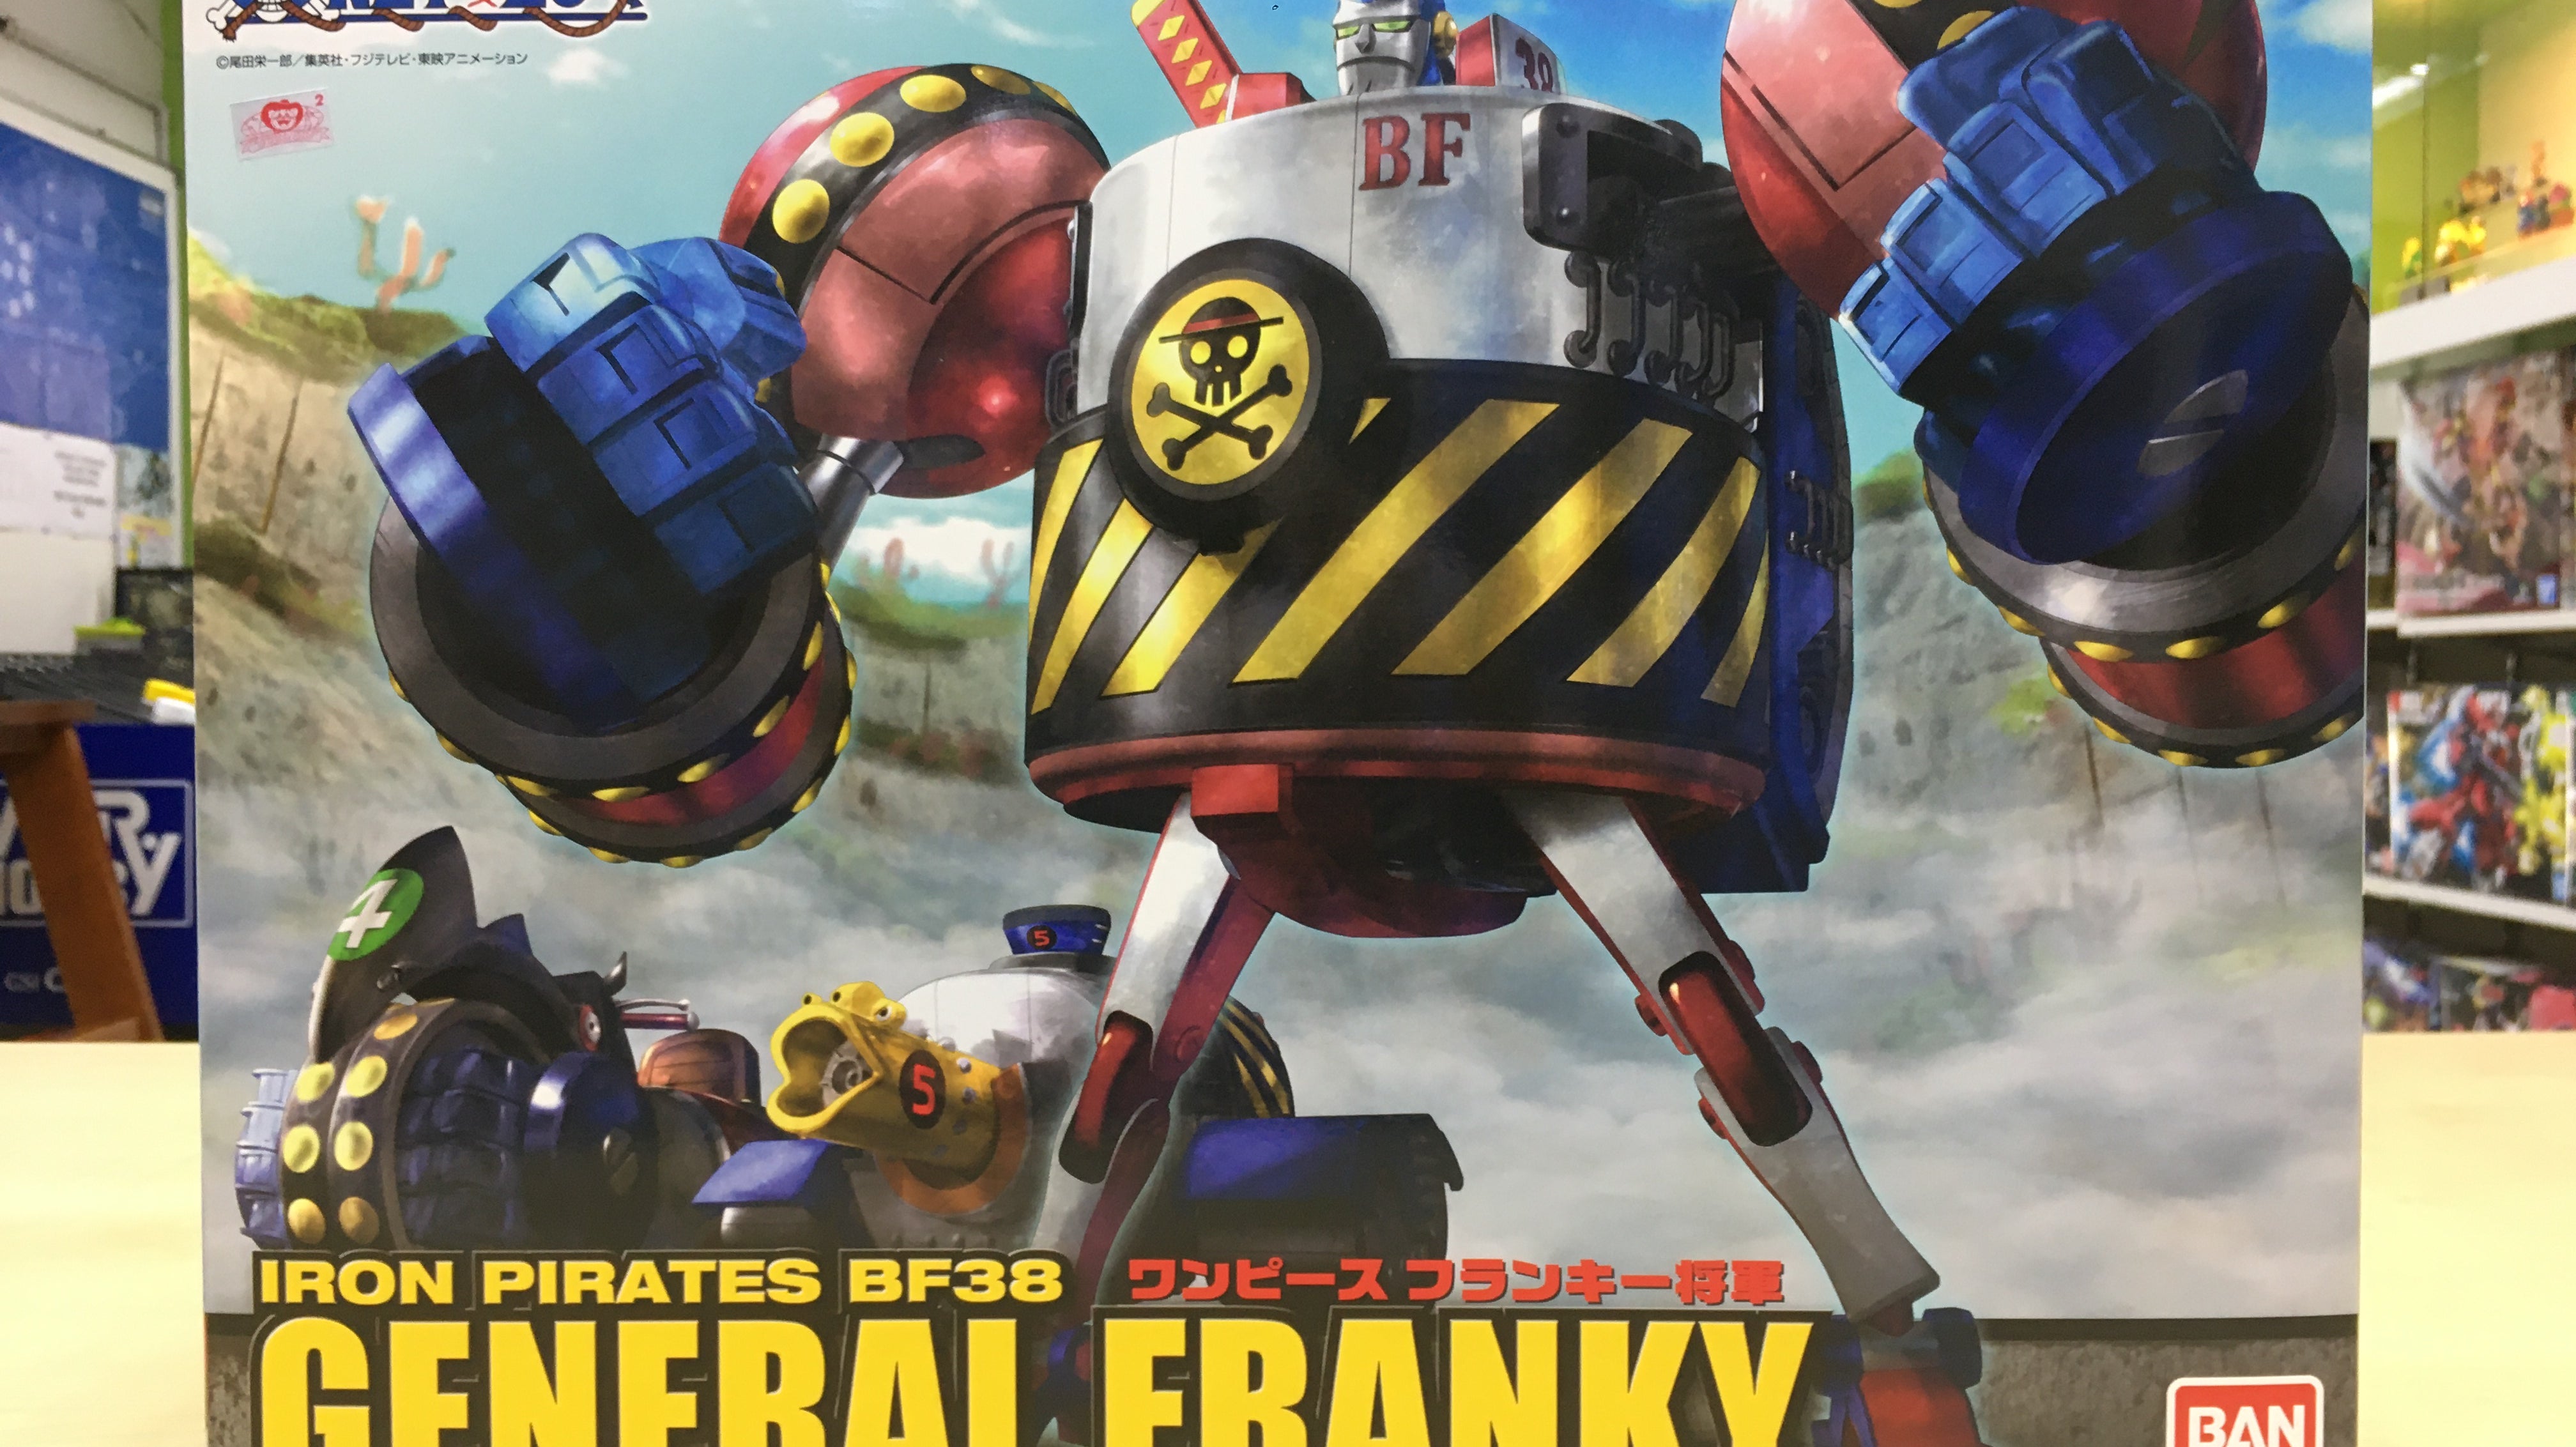 General Franky